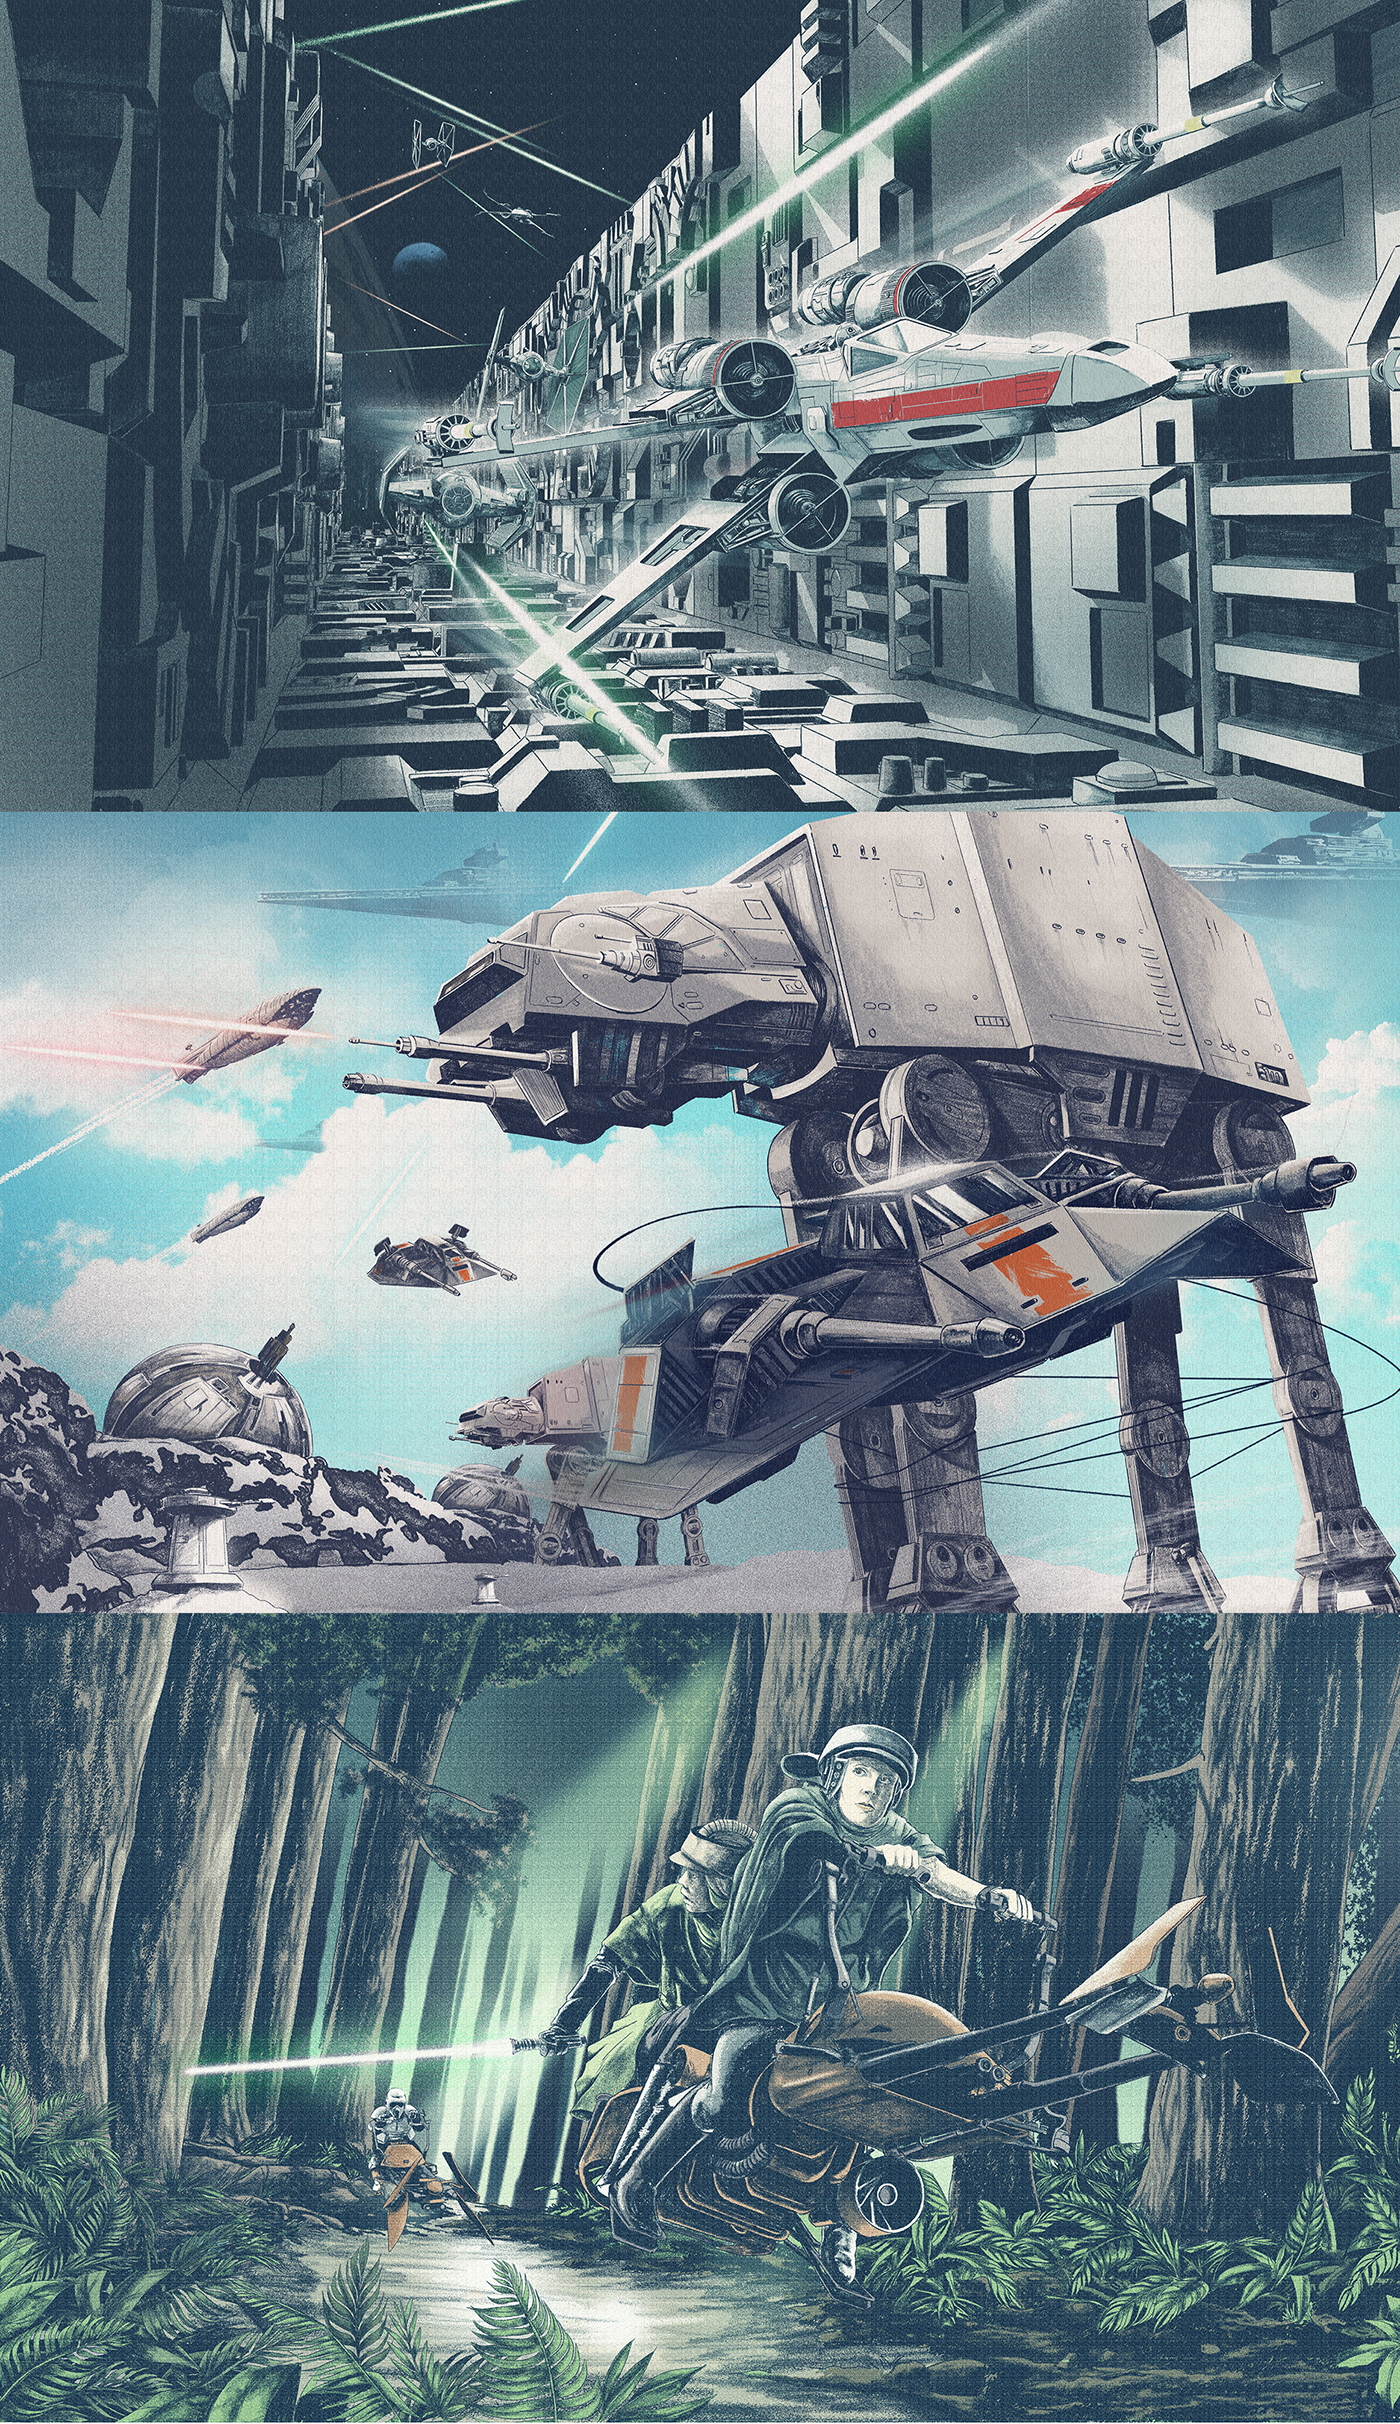 Star Wars example #2: Star Wars illustrations